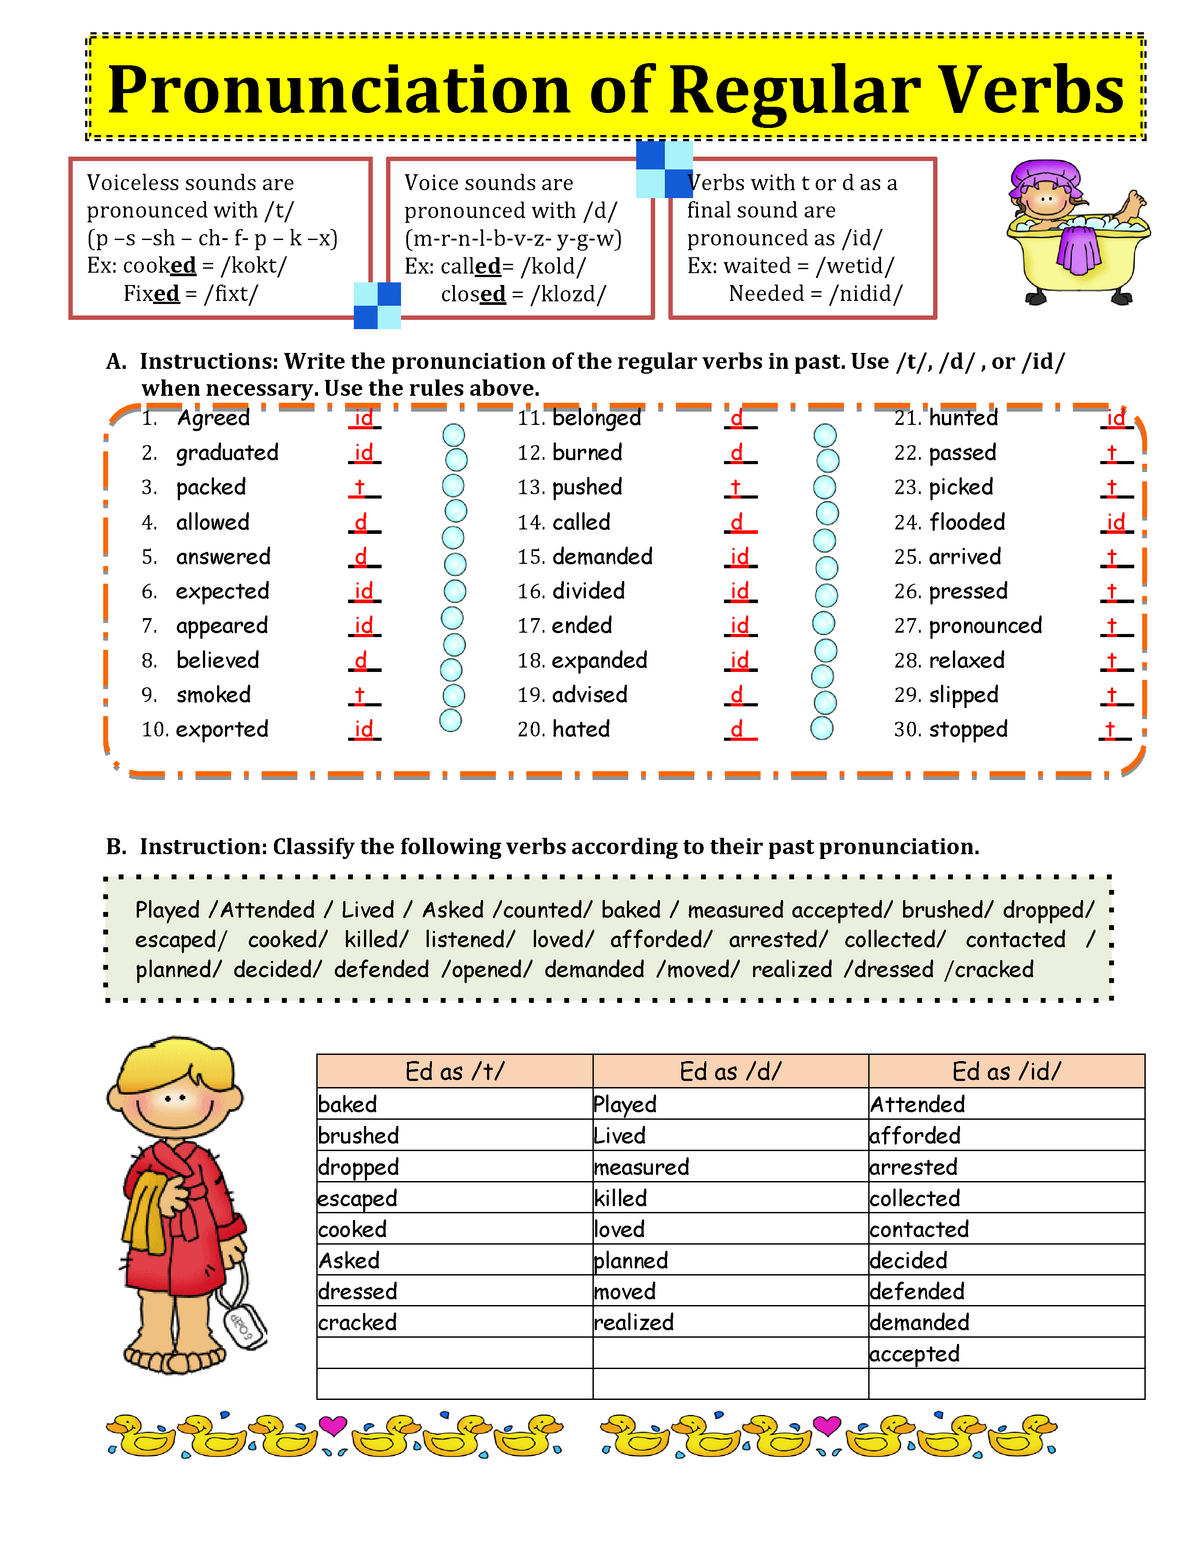 pronunciation-of-regular-verbs-in-the-simple-past-pronunciation-of-regular-verbs-played